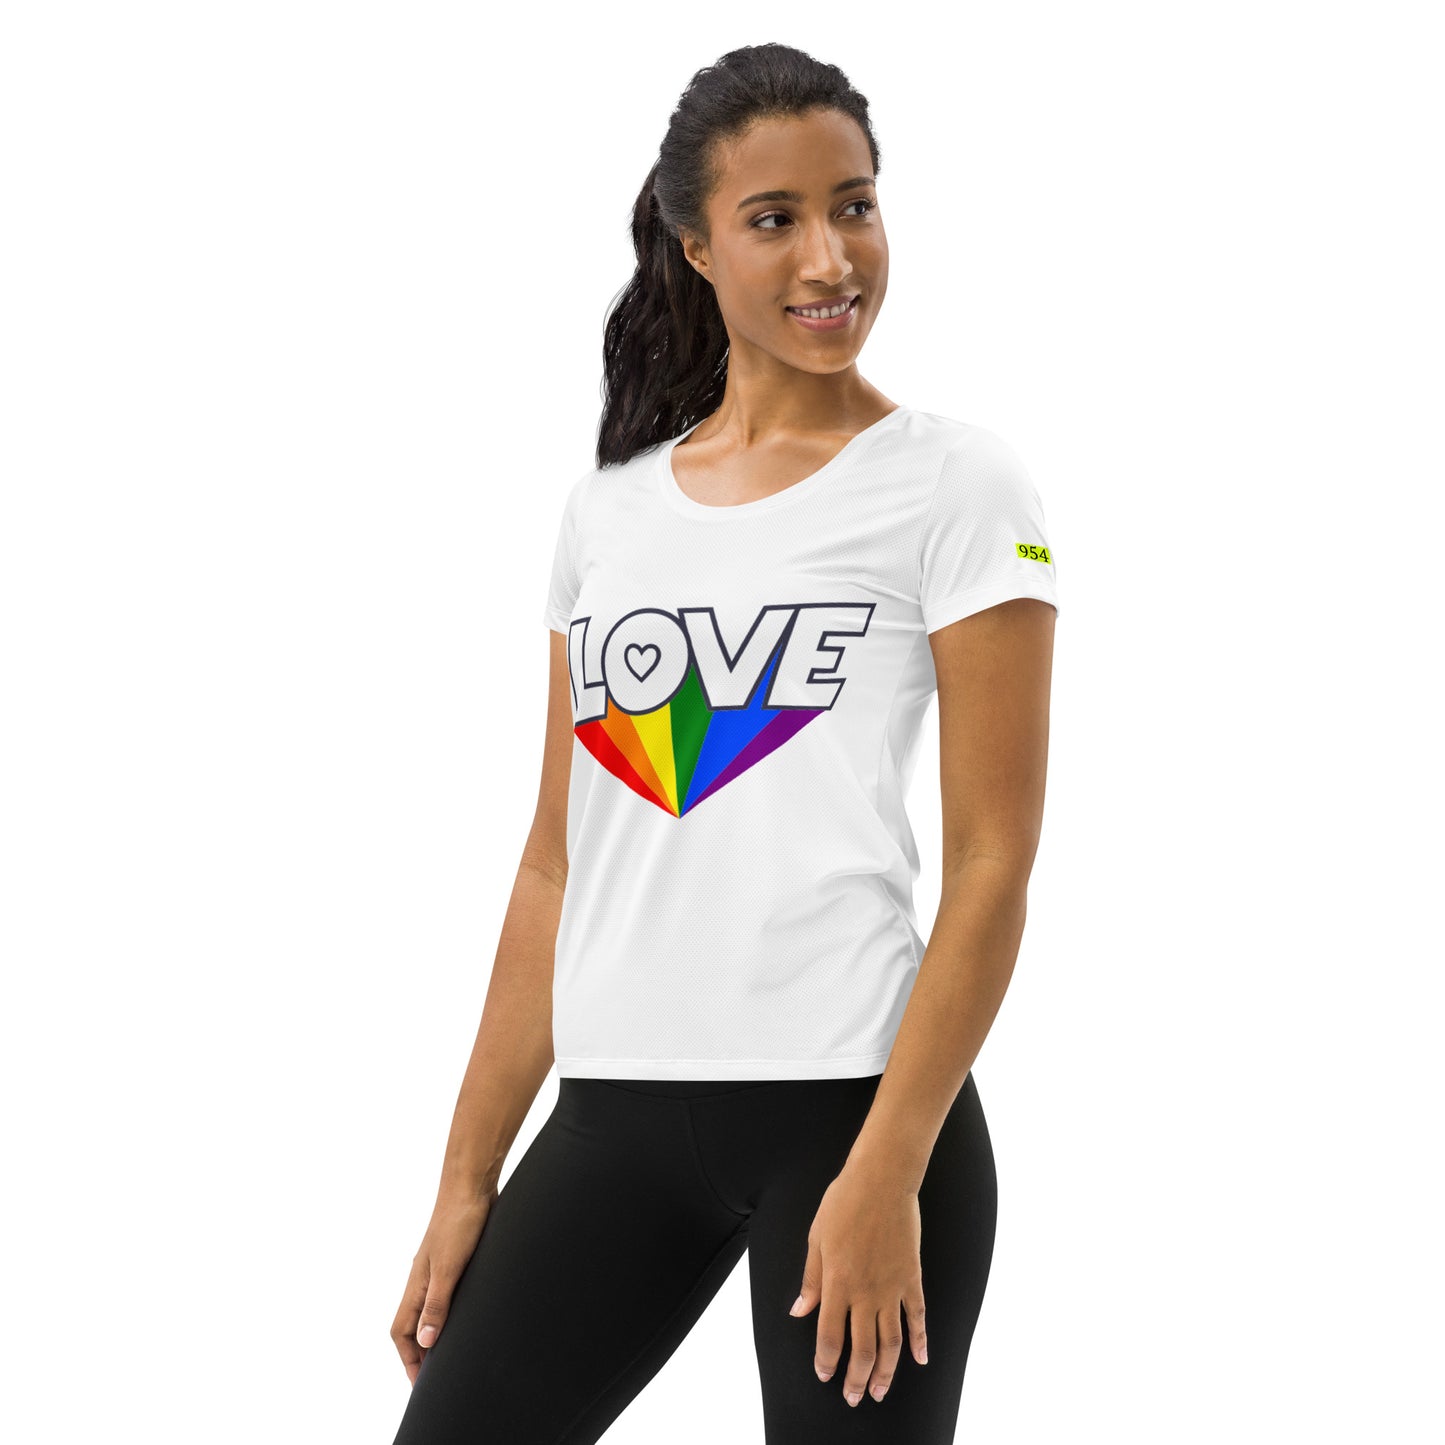 LGBTQIA All-Over Print Women's Athletic T-shirt